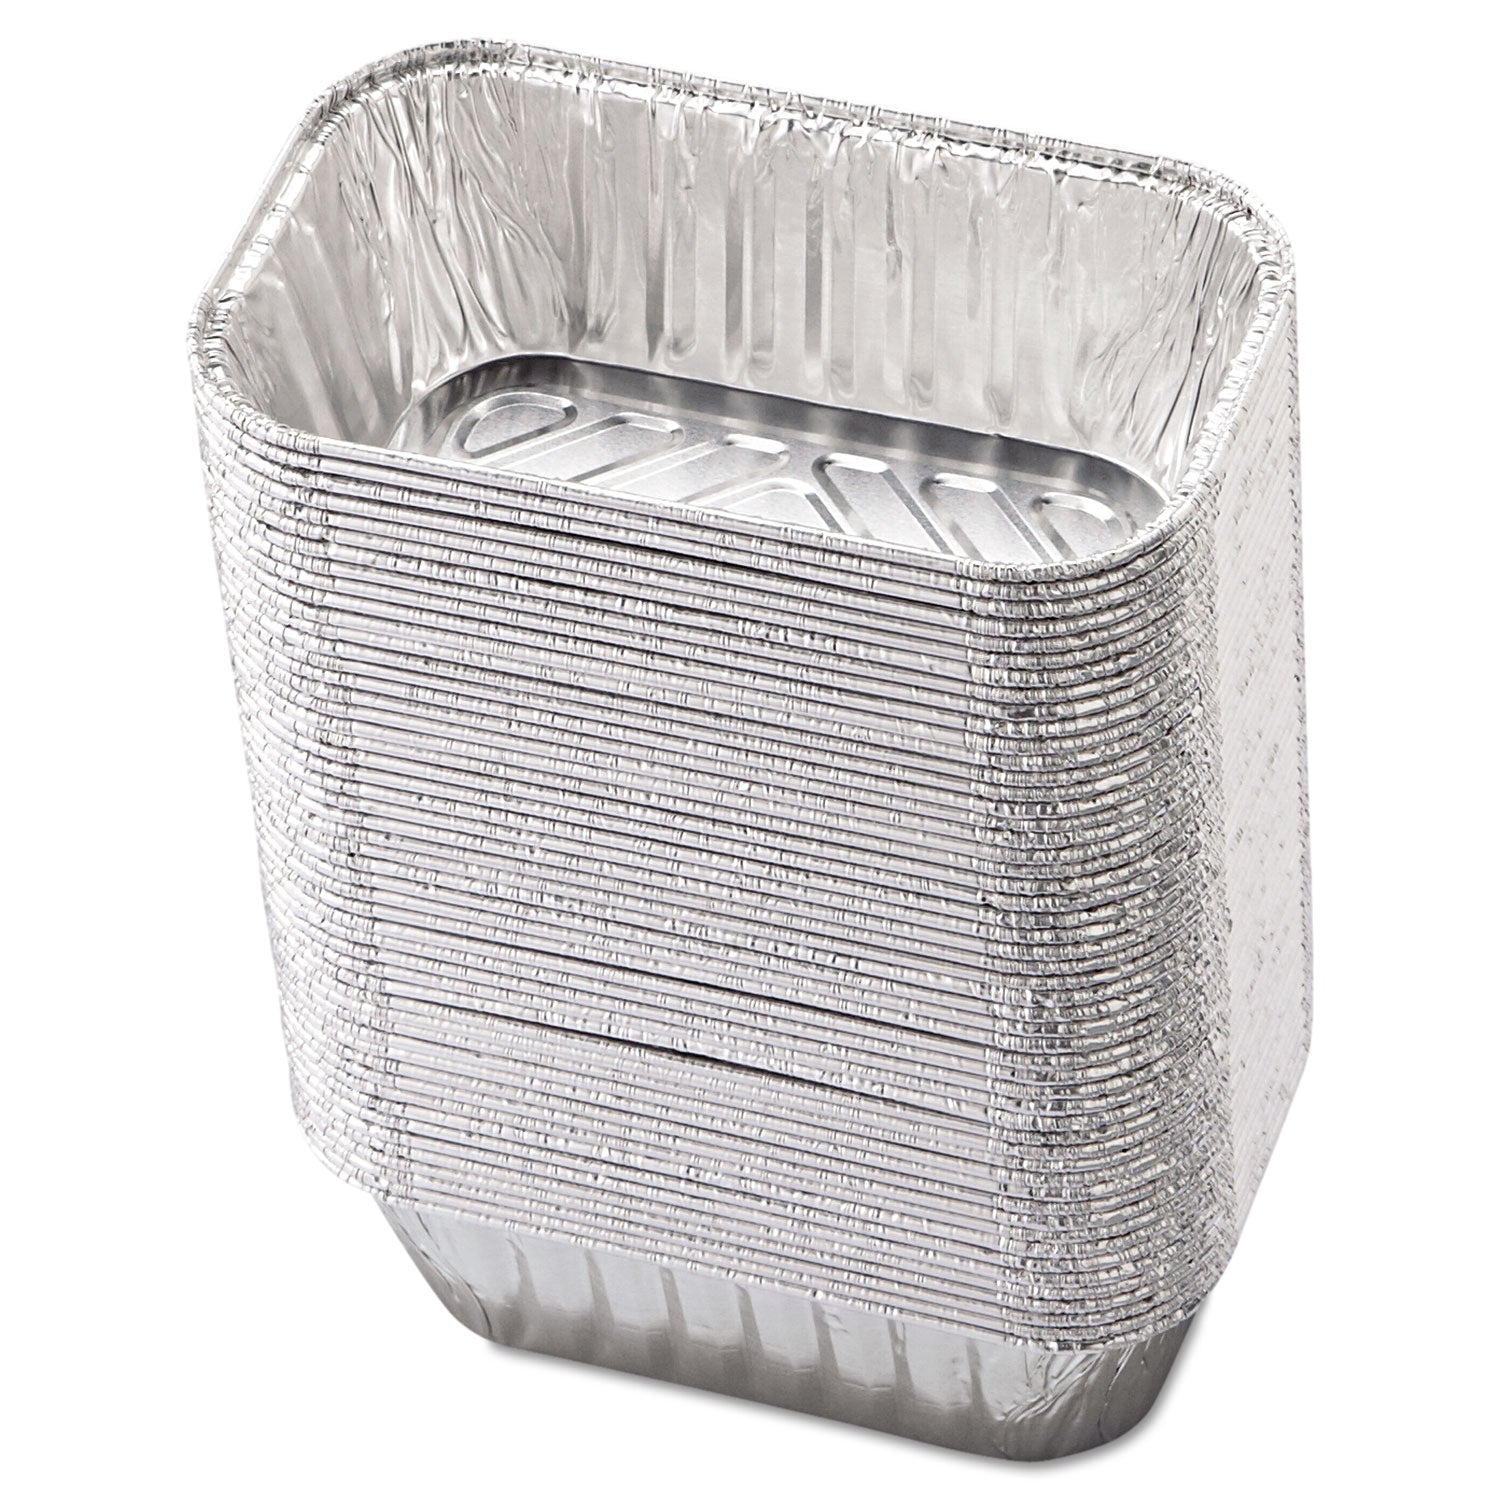 Aluminum Baking Pan, #1 Loaf, 1 lb Capacity, 5.72 x 3.31 x 2.03, 200/Carton - 